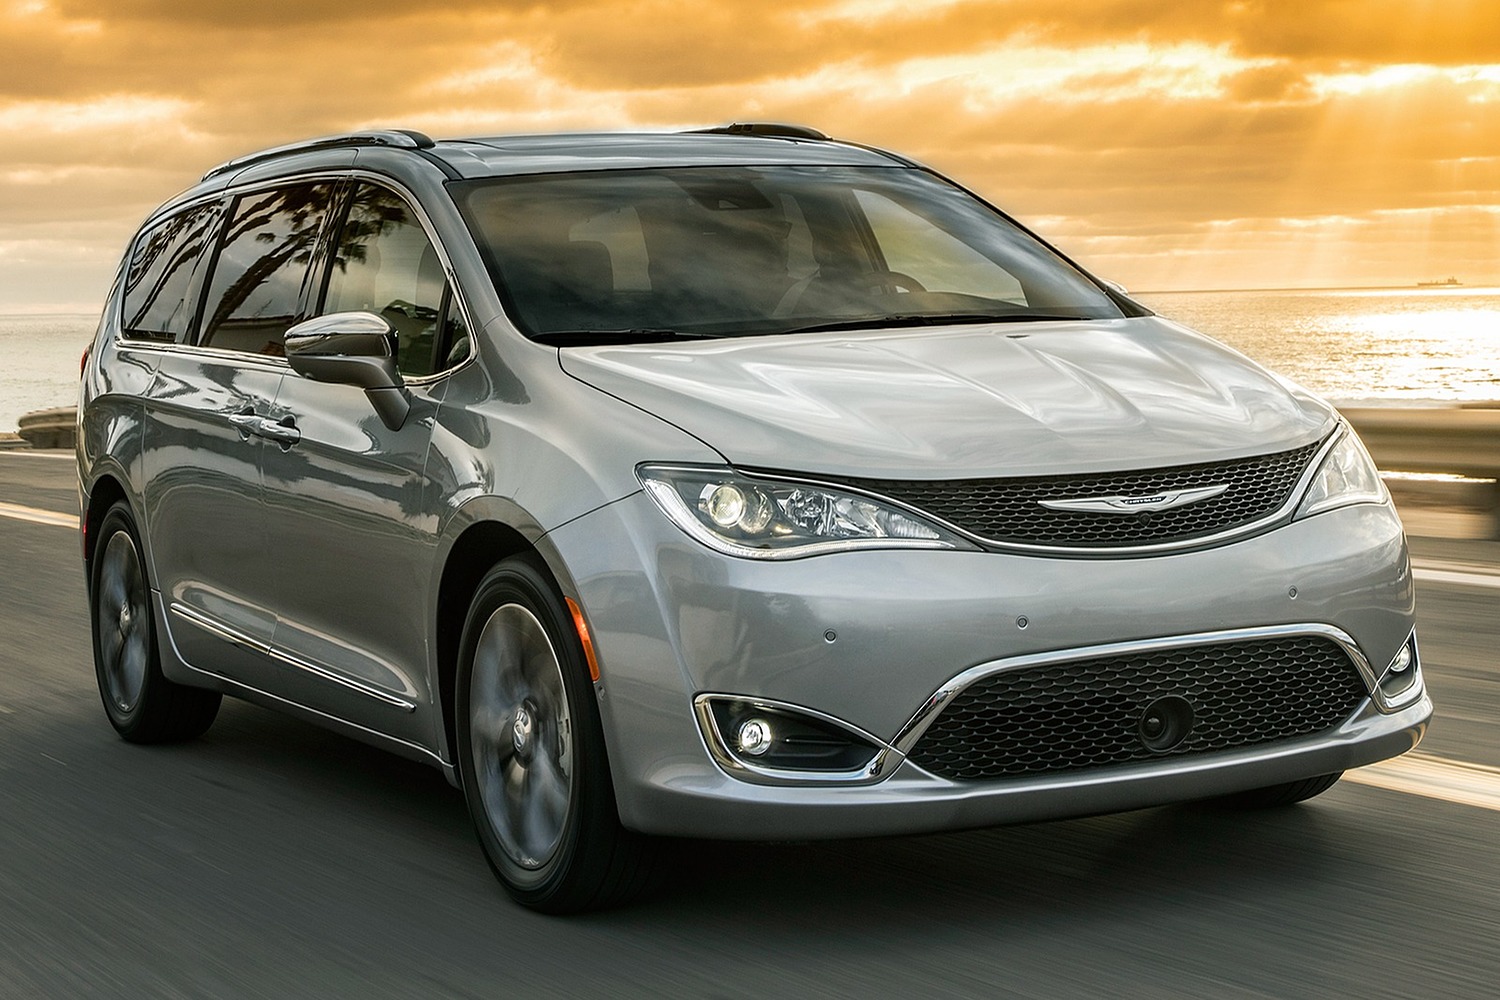 2017 Chrysler Pacifica Limited Passenger Minivan Exterior Shown